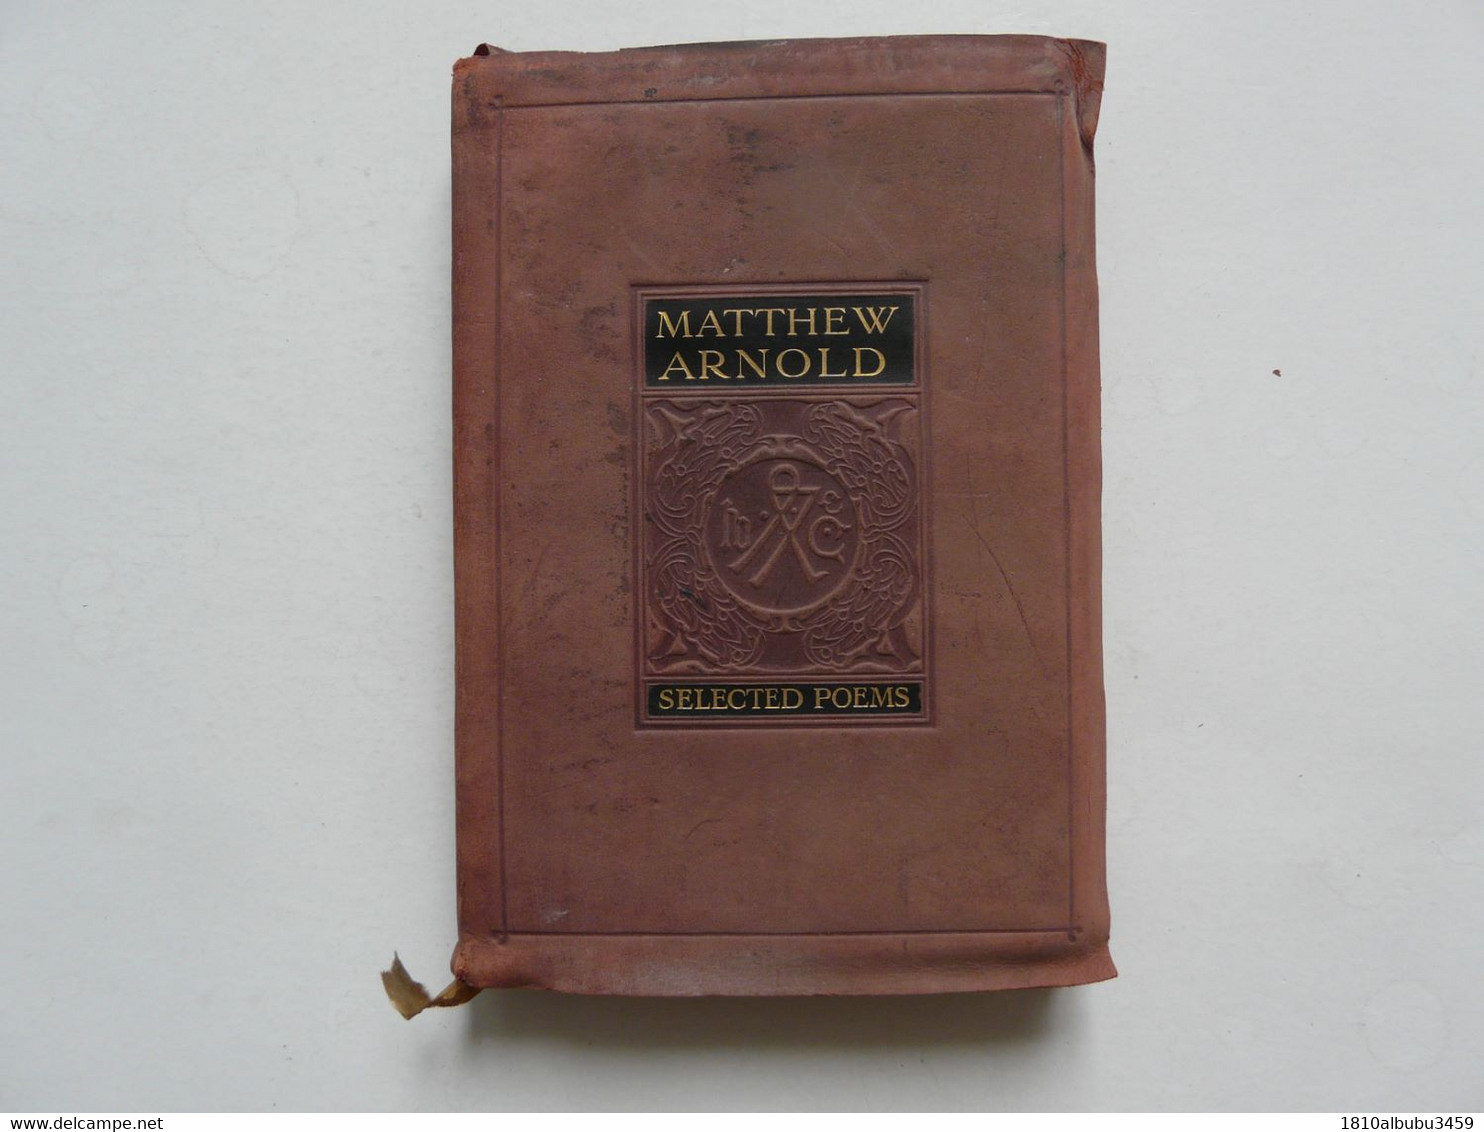 MATTHEW ARNOLD - SELECTED POEMS ( George G. HARRAP & Cie - London) - 1850-1899